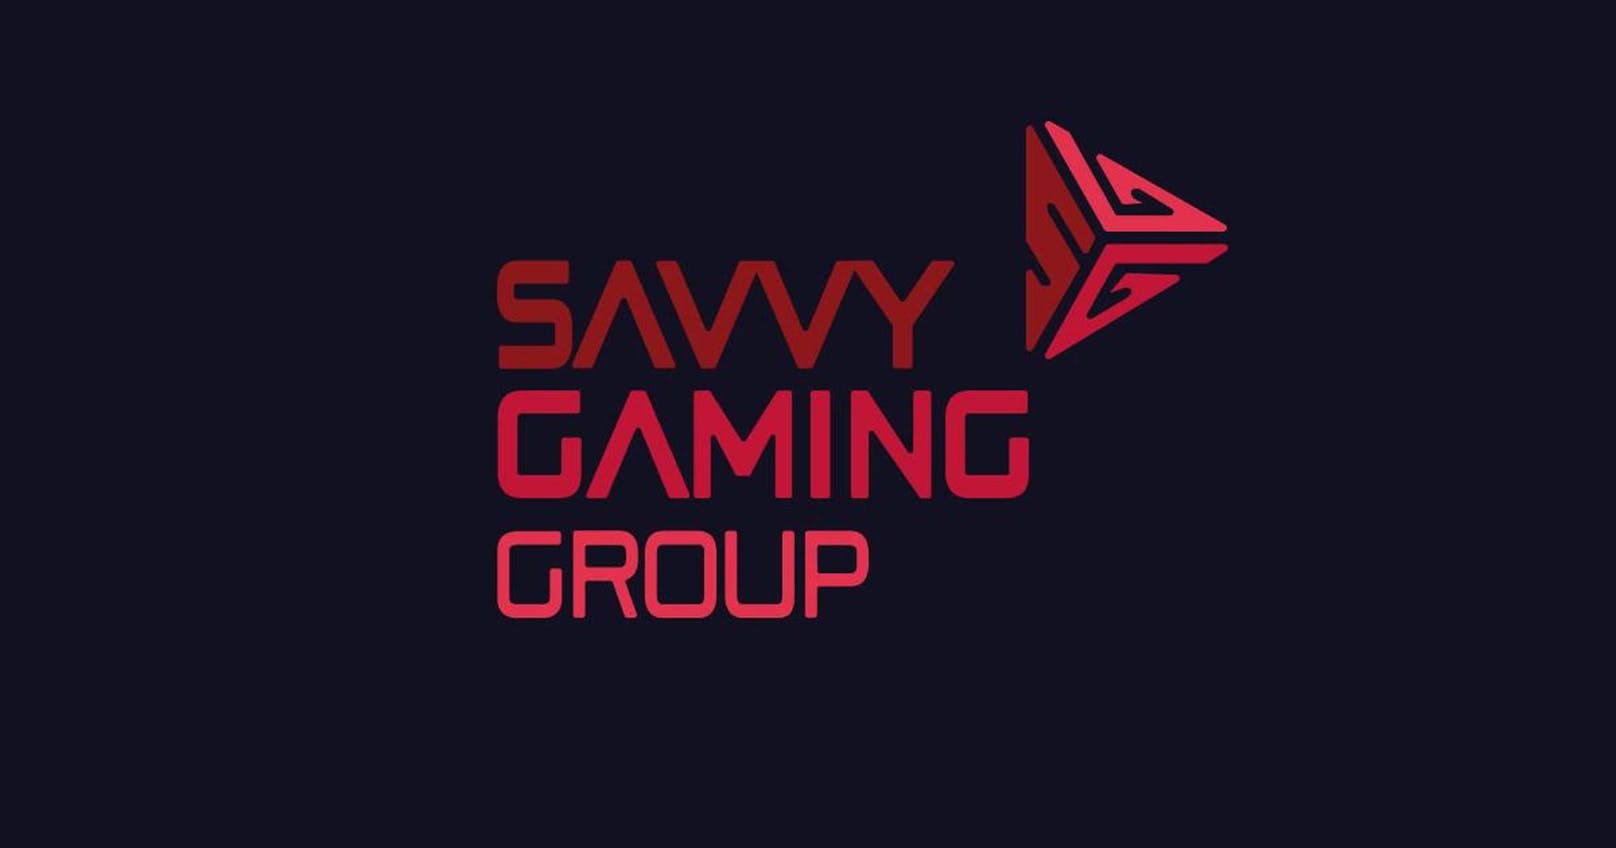 Das Saudi-Unternehmen Savvy Gaming Group kauft die Liga.